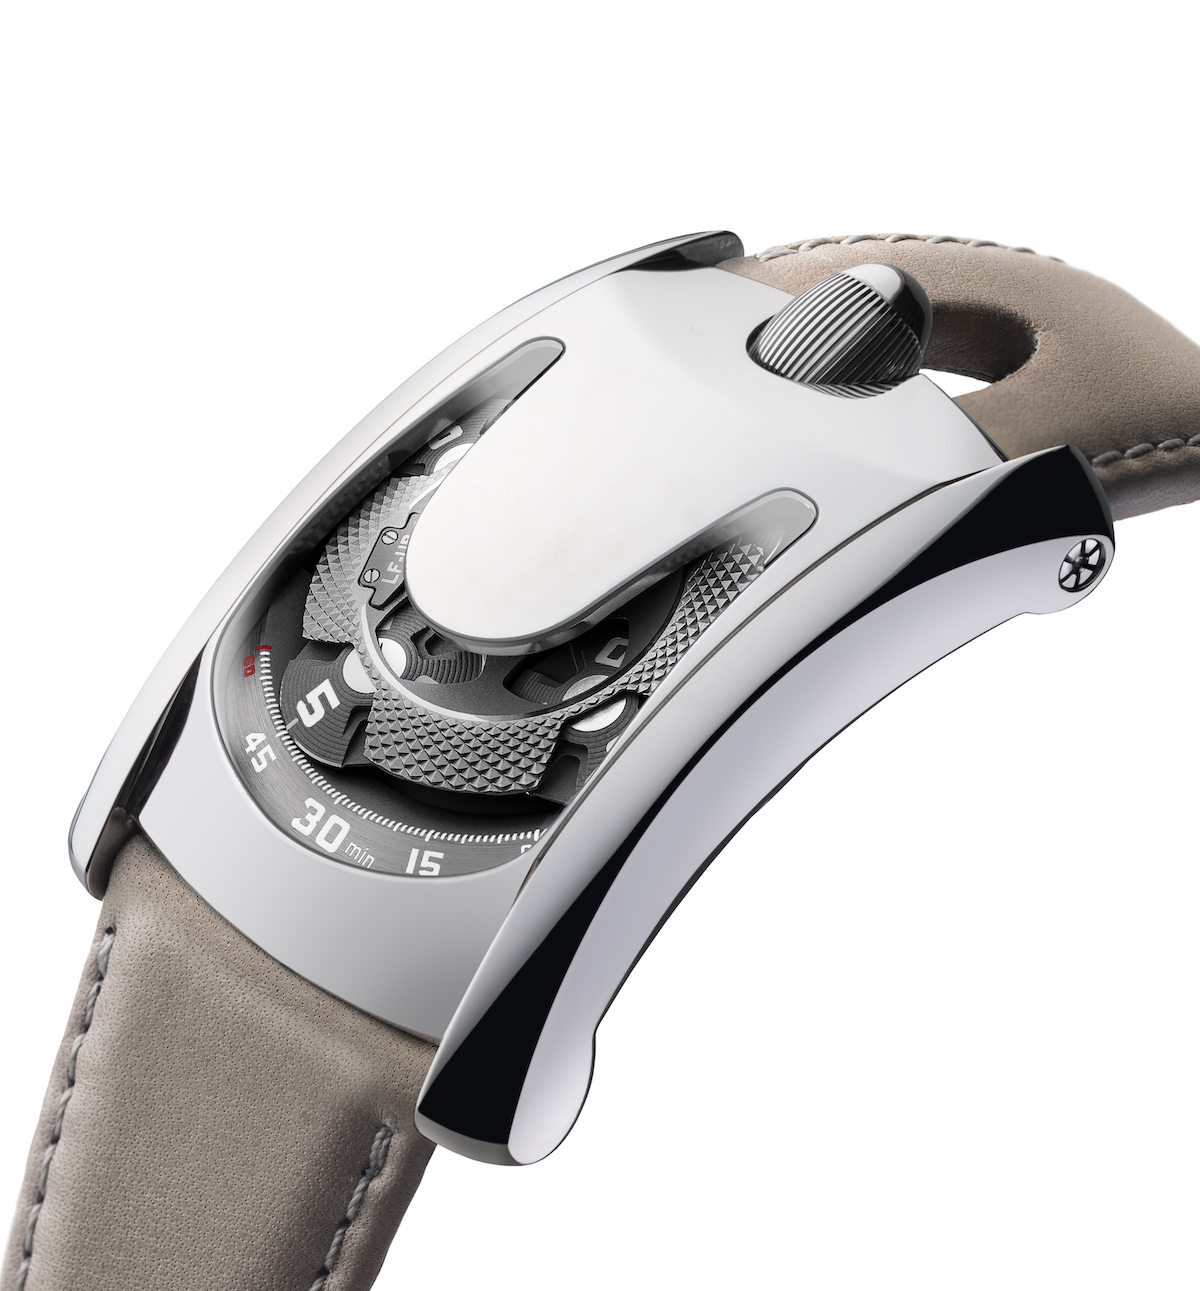 watch watches watchmaking company urwerk brands manufactures handcrafted